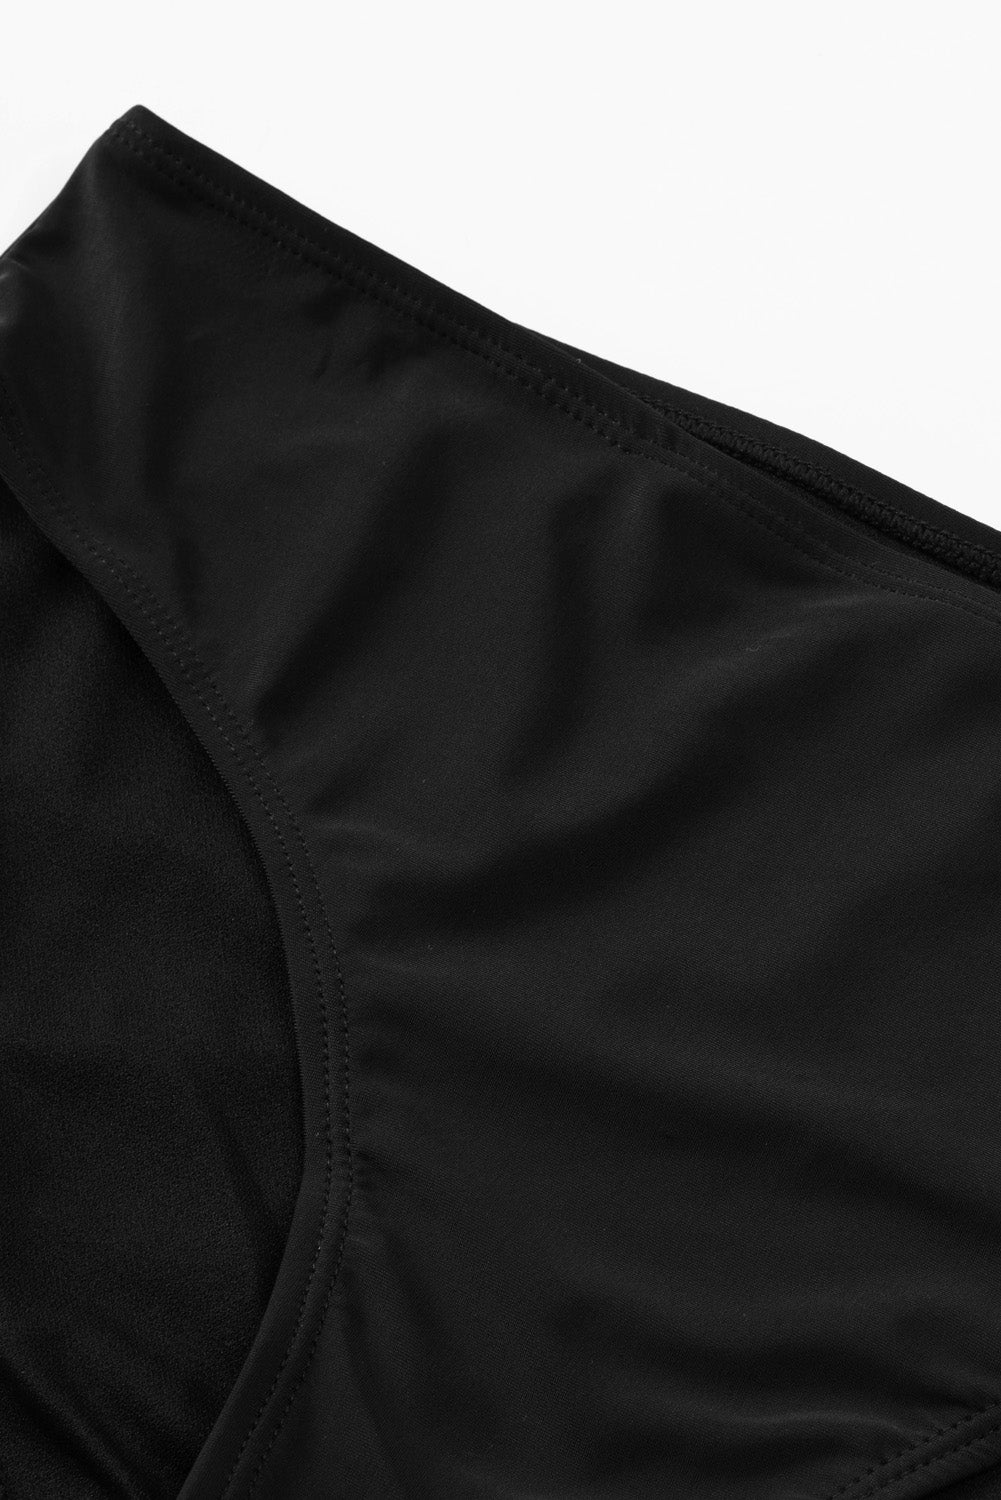 LC412113-102-S, LC412113-102-M, LC412113-102-L, LC412113-102-XL, LC412113-102-2XL, Black Women's Retro Polka Dot Print Bathing Suit Handkerchief Hem Tankini Set